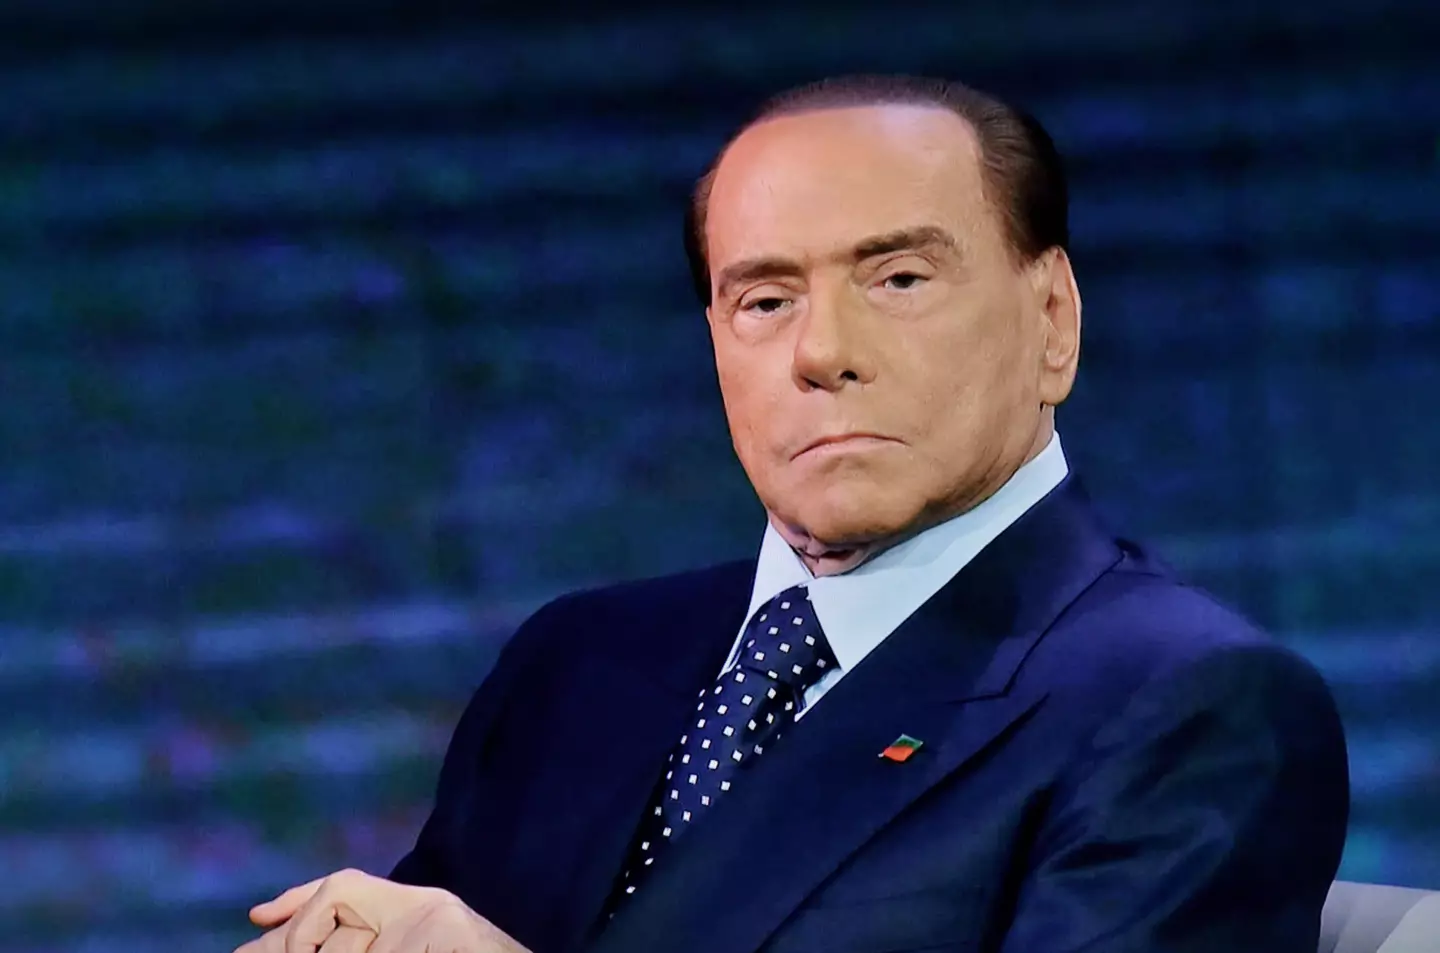 Silvio Berlusconi has died aged 86.